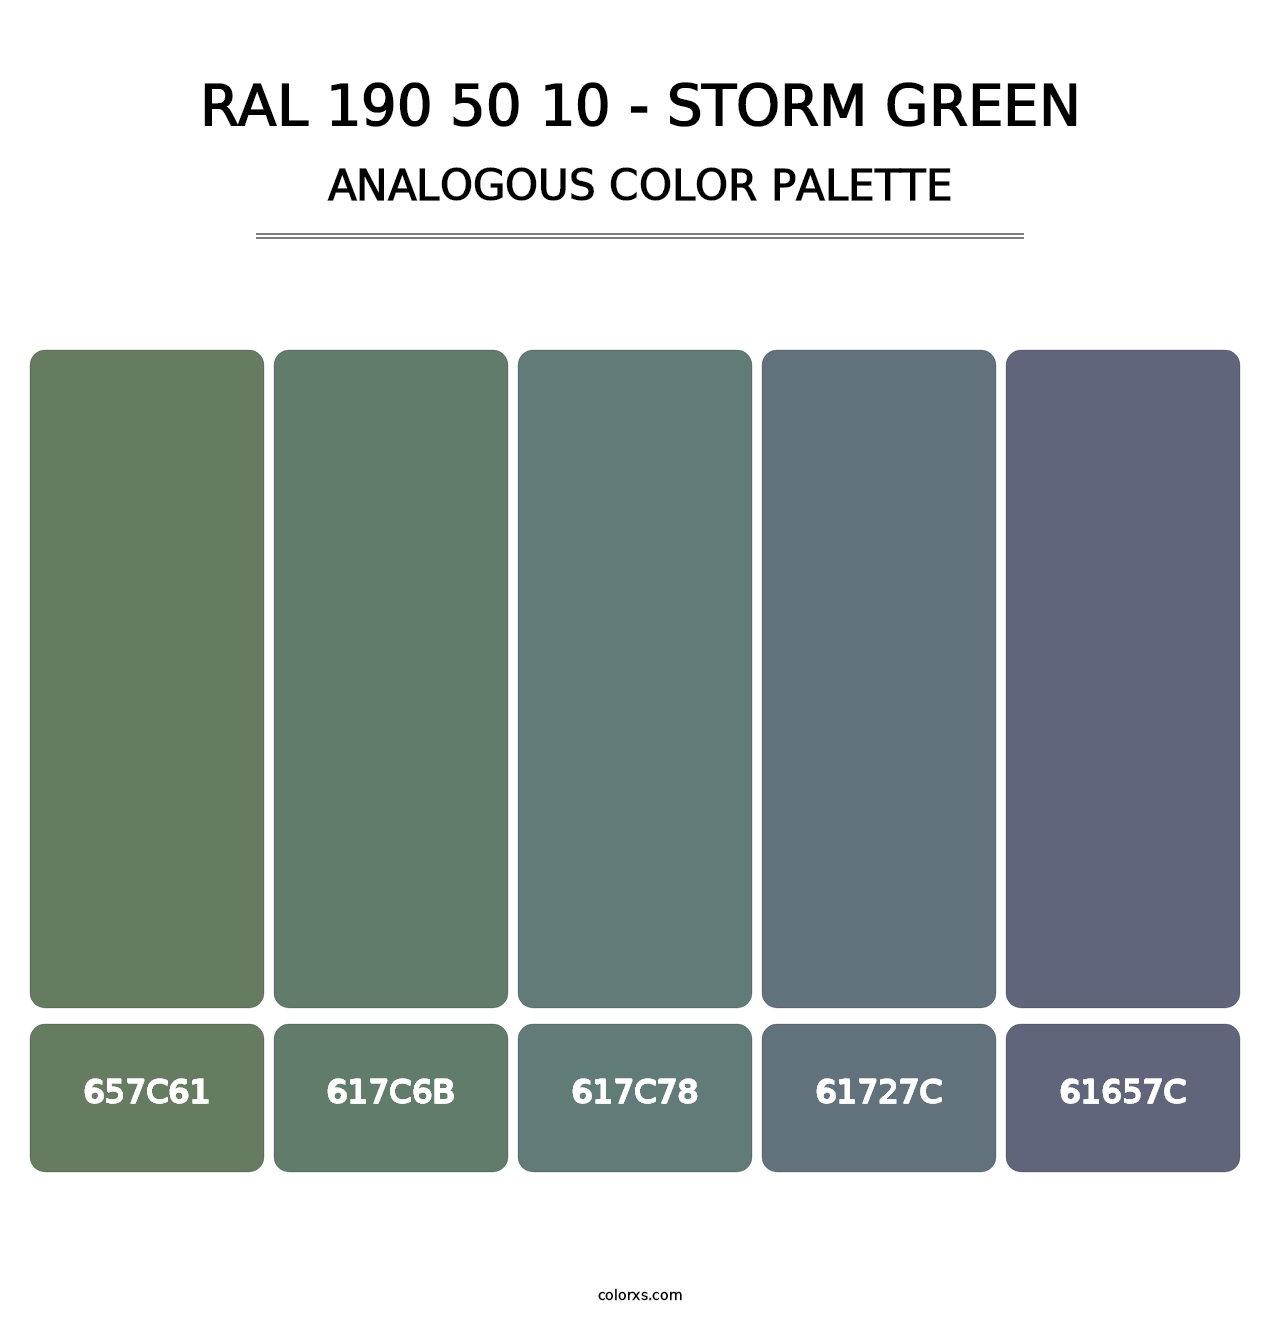 RAL 190 50 10 - Storm Green - Analogous Color Palette